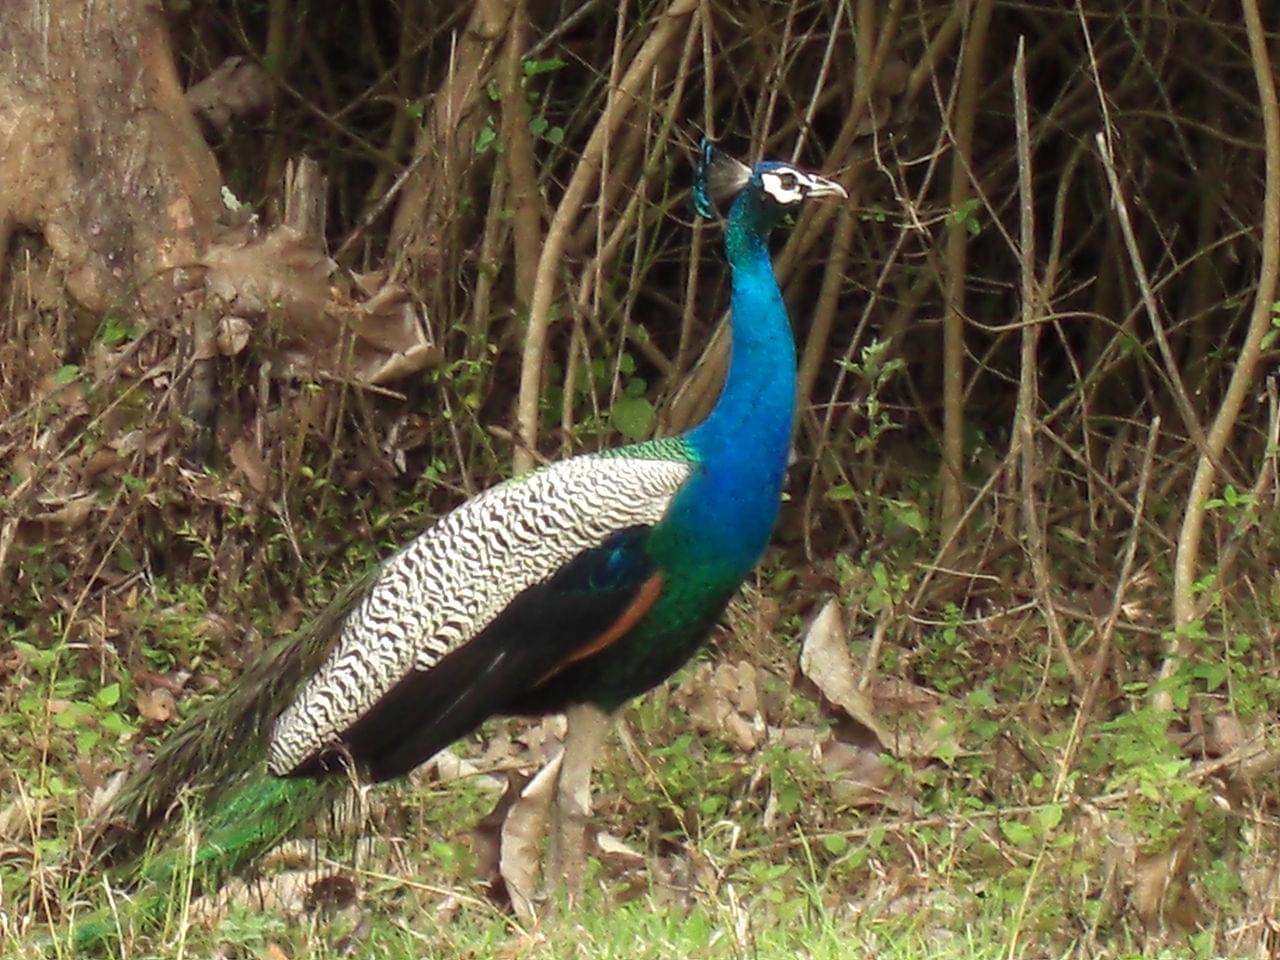 Peacock Bandipur National Park